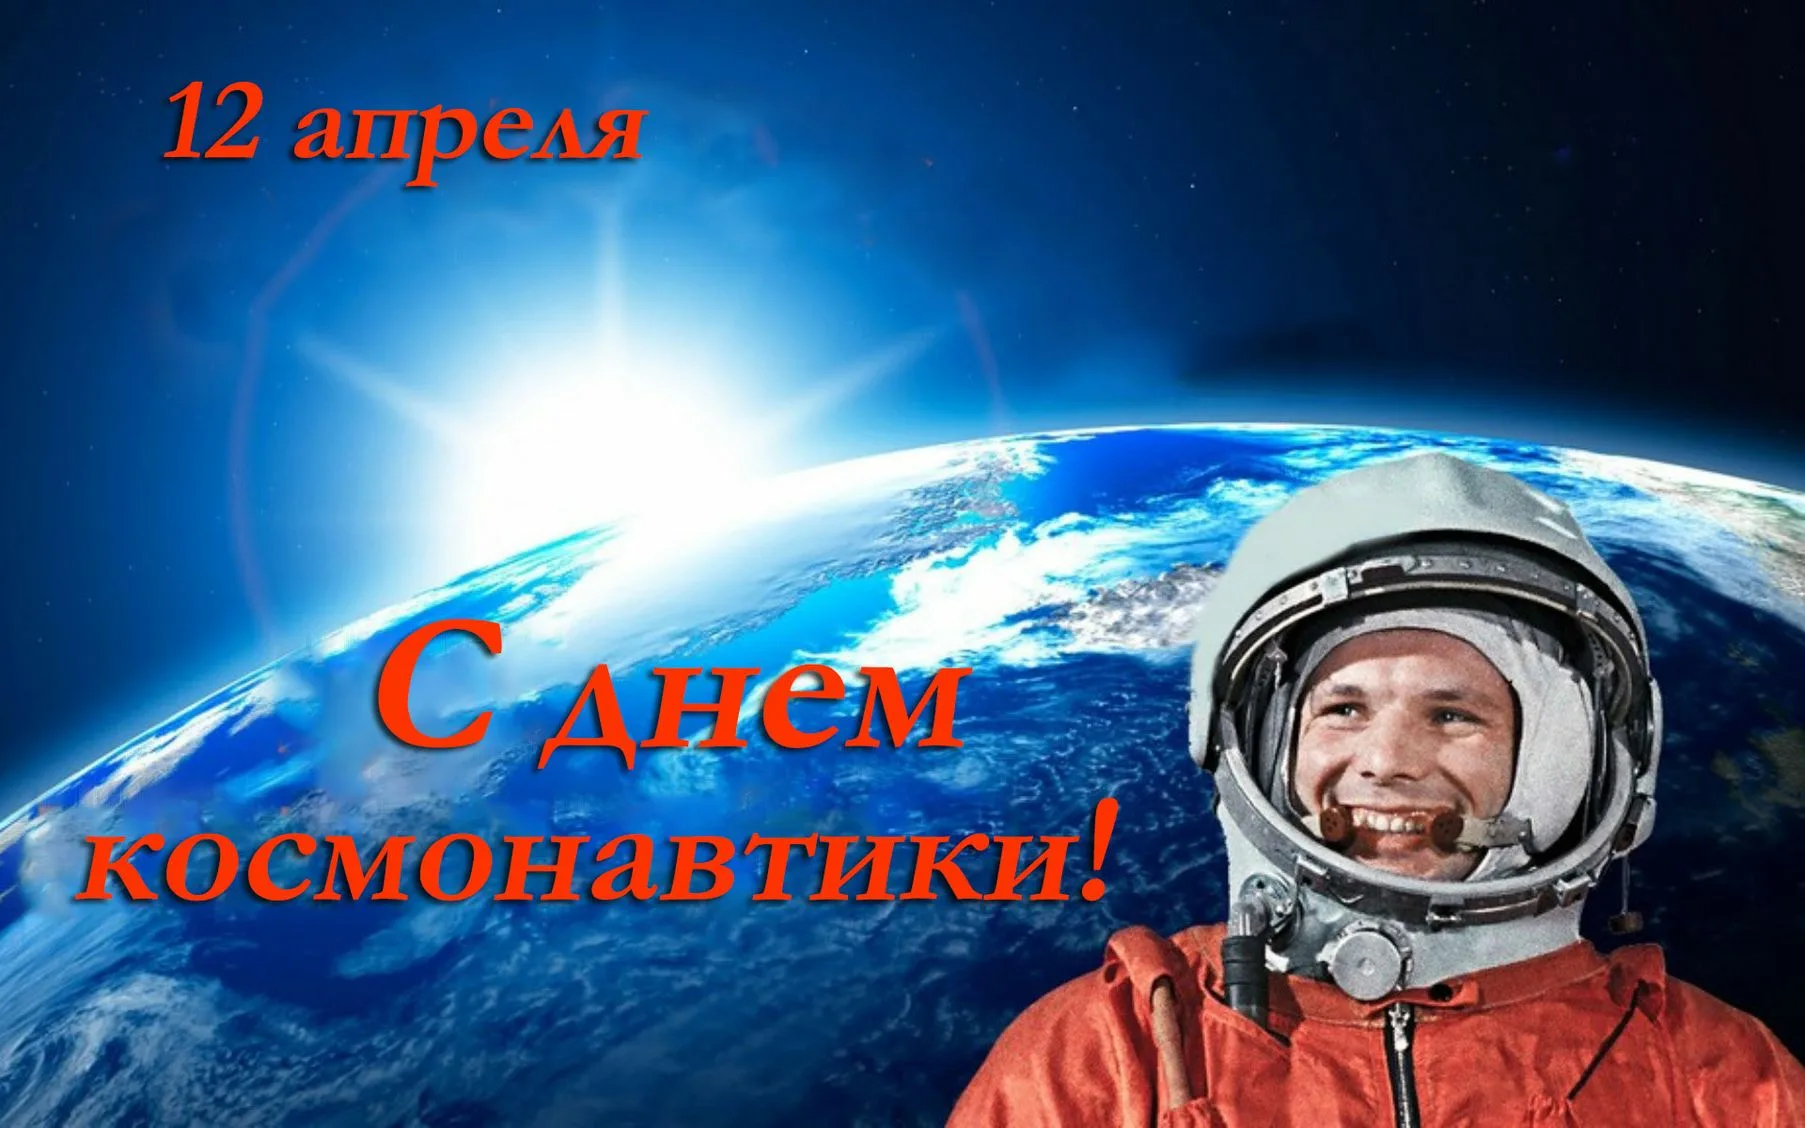 2 апреля день космонавтики. 12 Апреля день космонавтики. День Космонавта. 12 - Апрель день косонавтики. День космонавтики картинки.